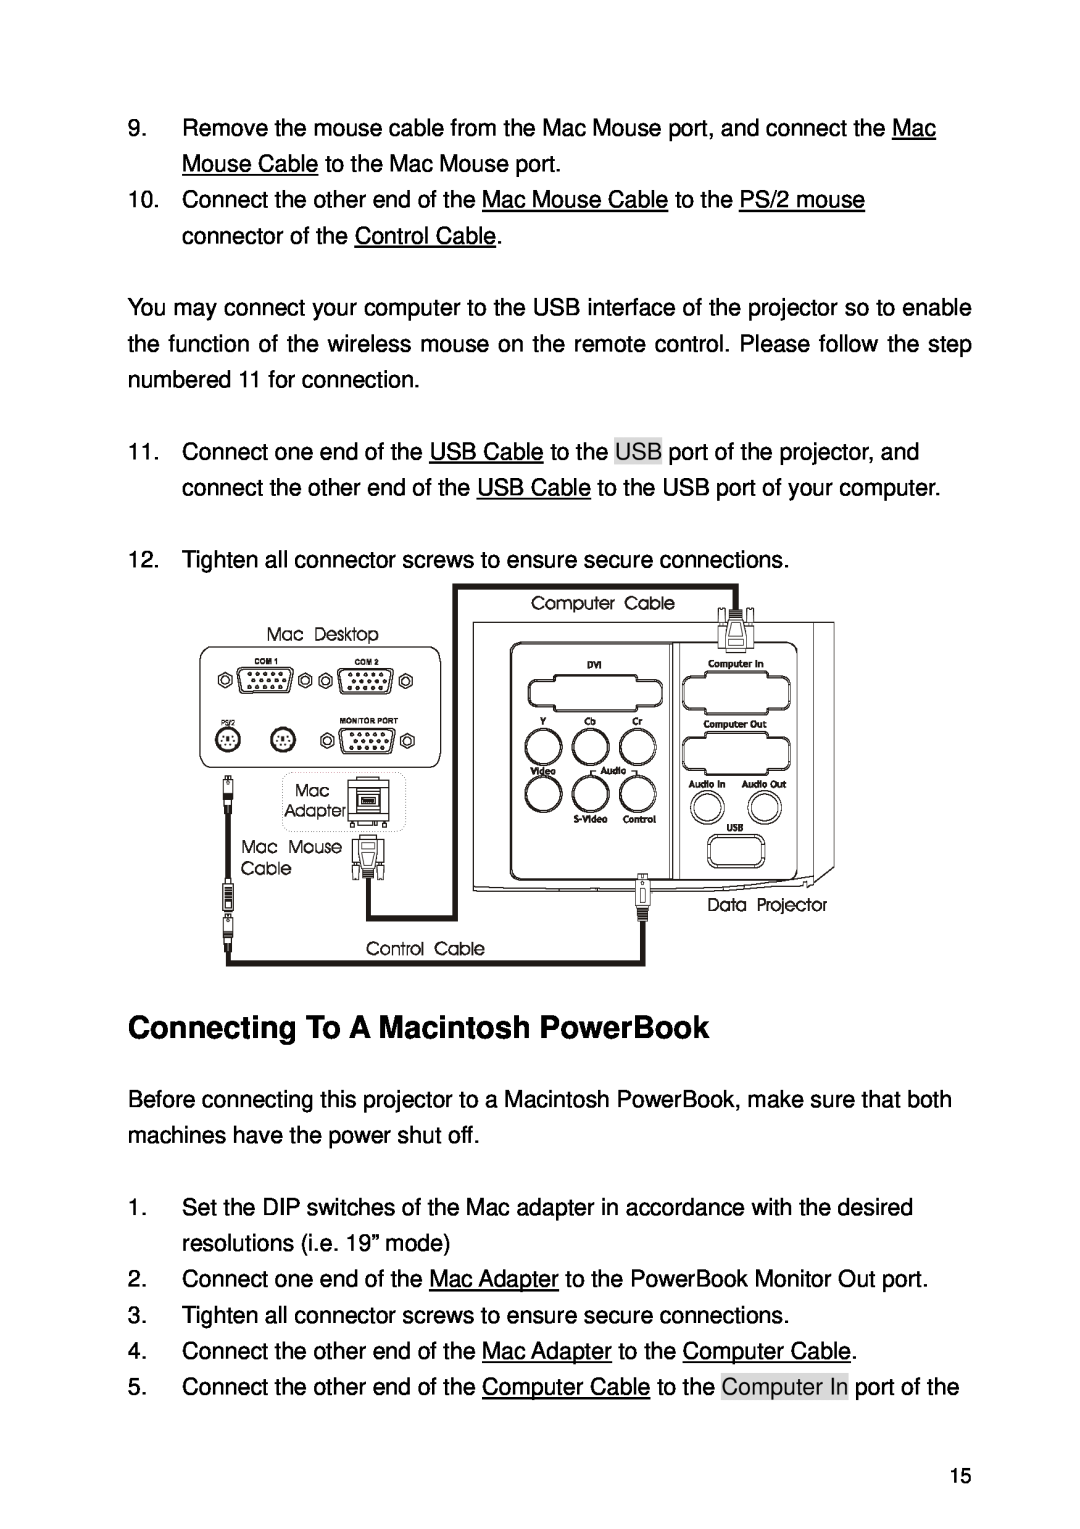 Microtek CX4 manual Connecting To A Macintosh PowerBook 